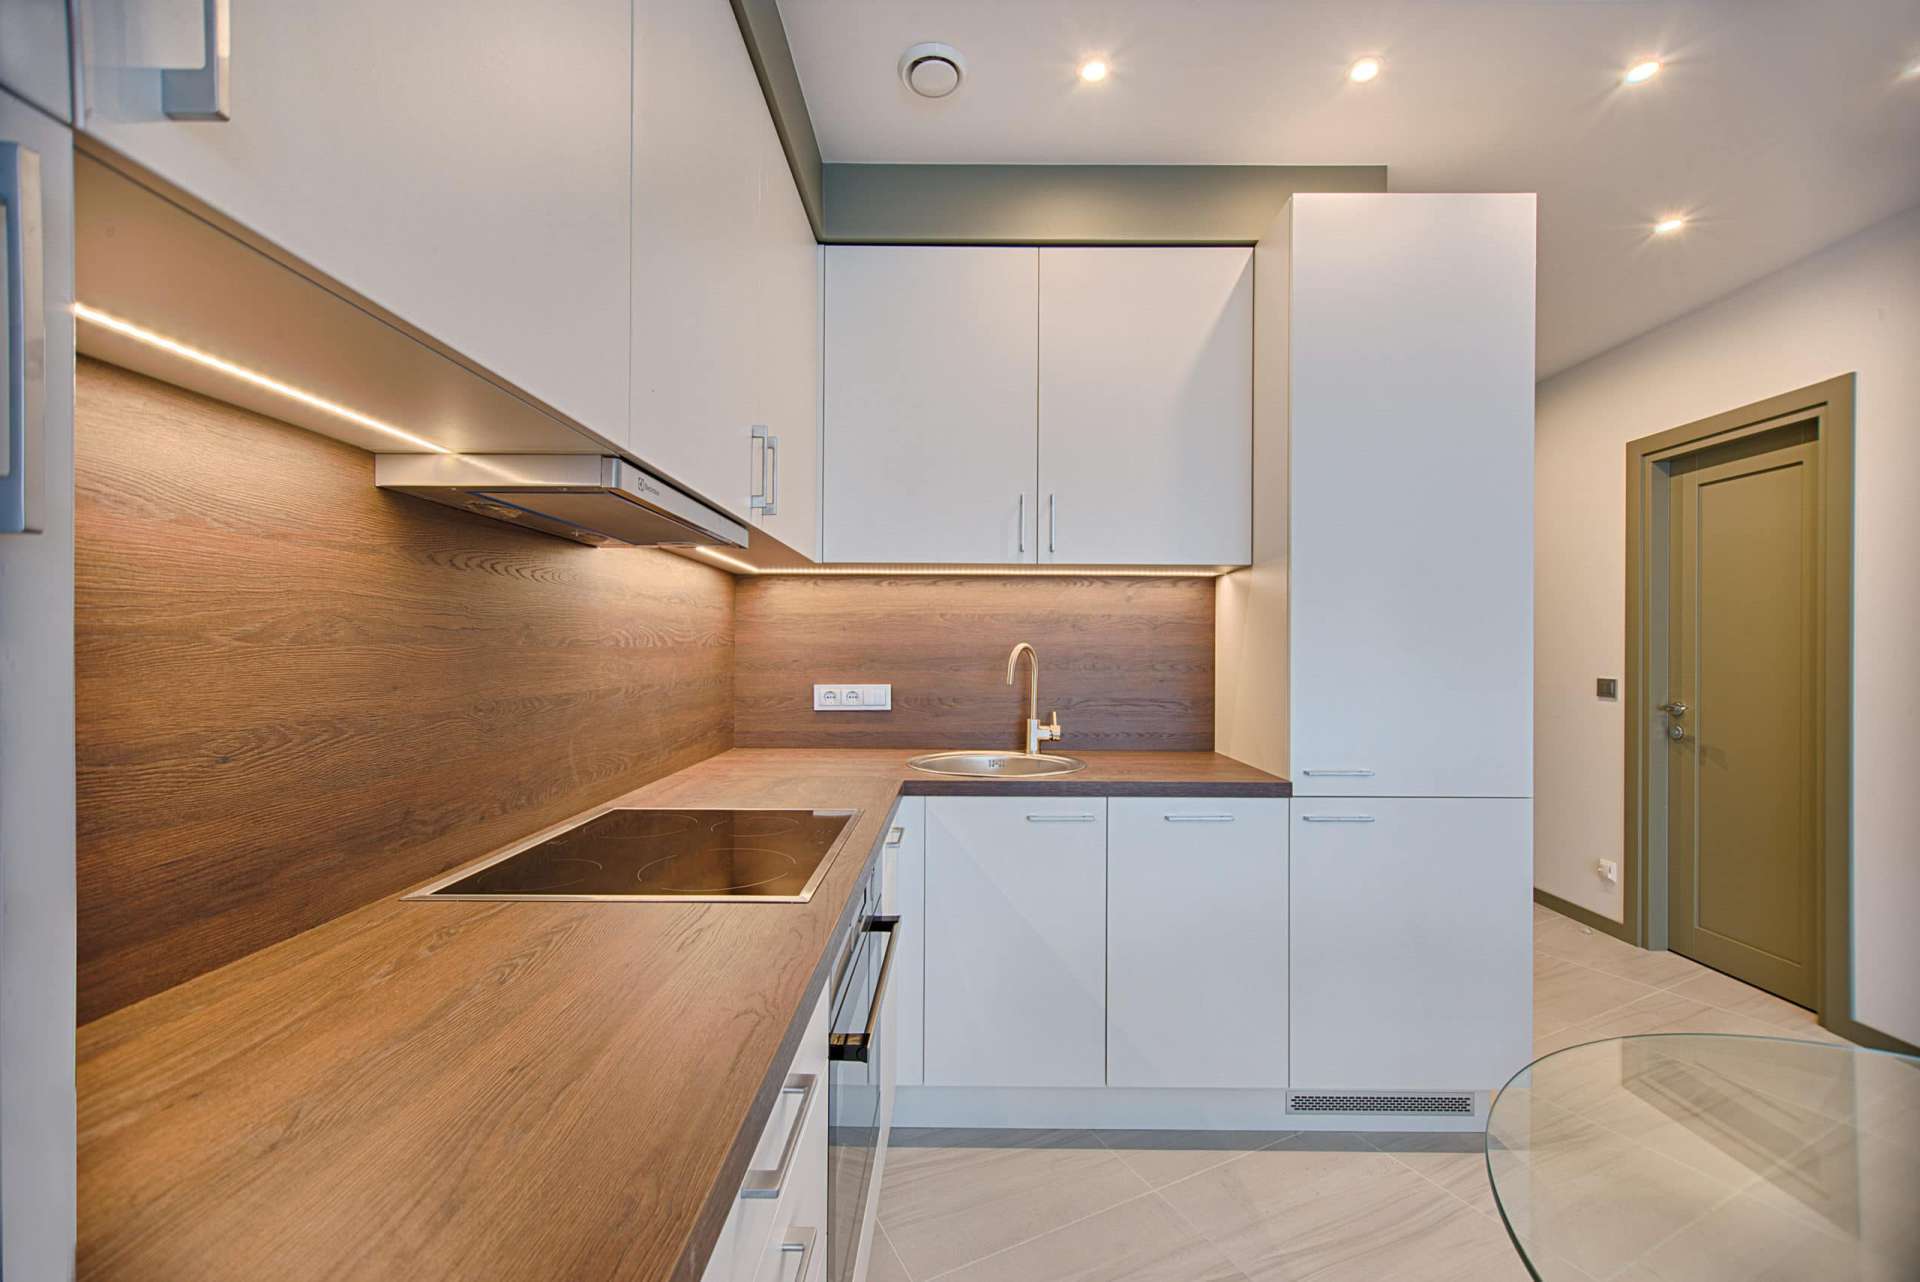 new interior apartment kitchen